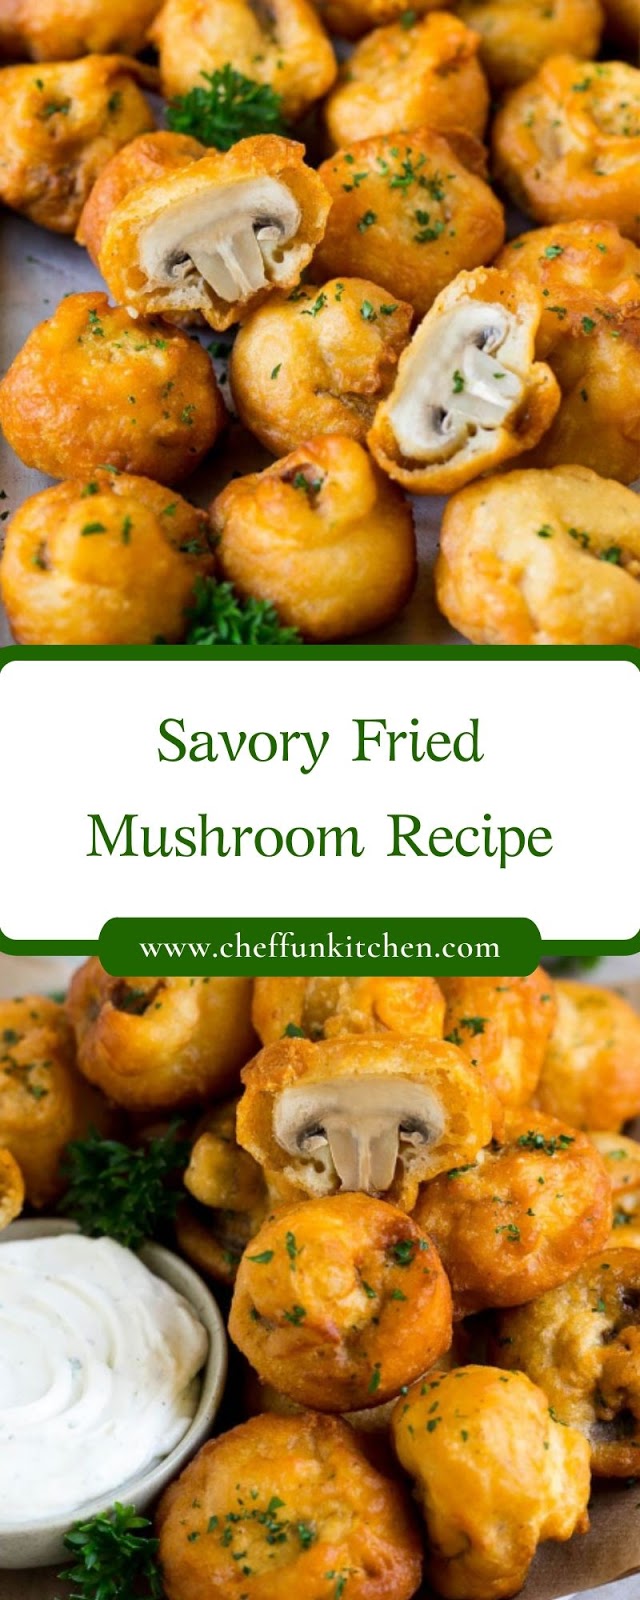 Savory Fried Mushroom Recipe